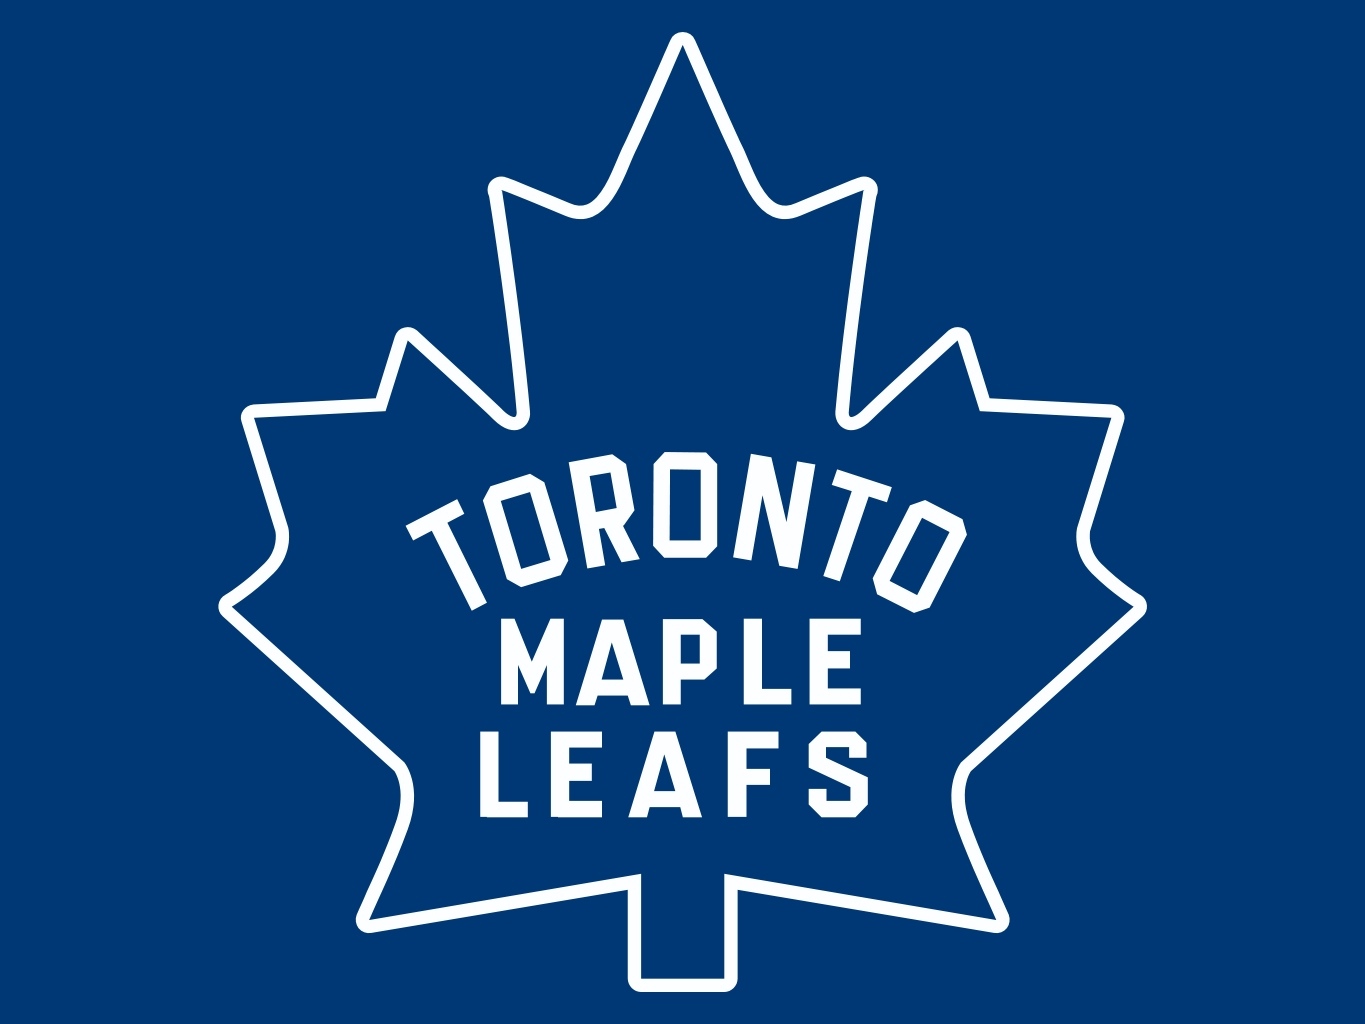 Toronto Maple Leafs Logo Wallpaper - WallpaperSafari